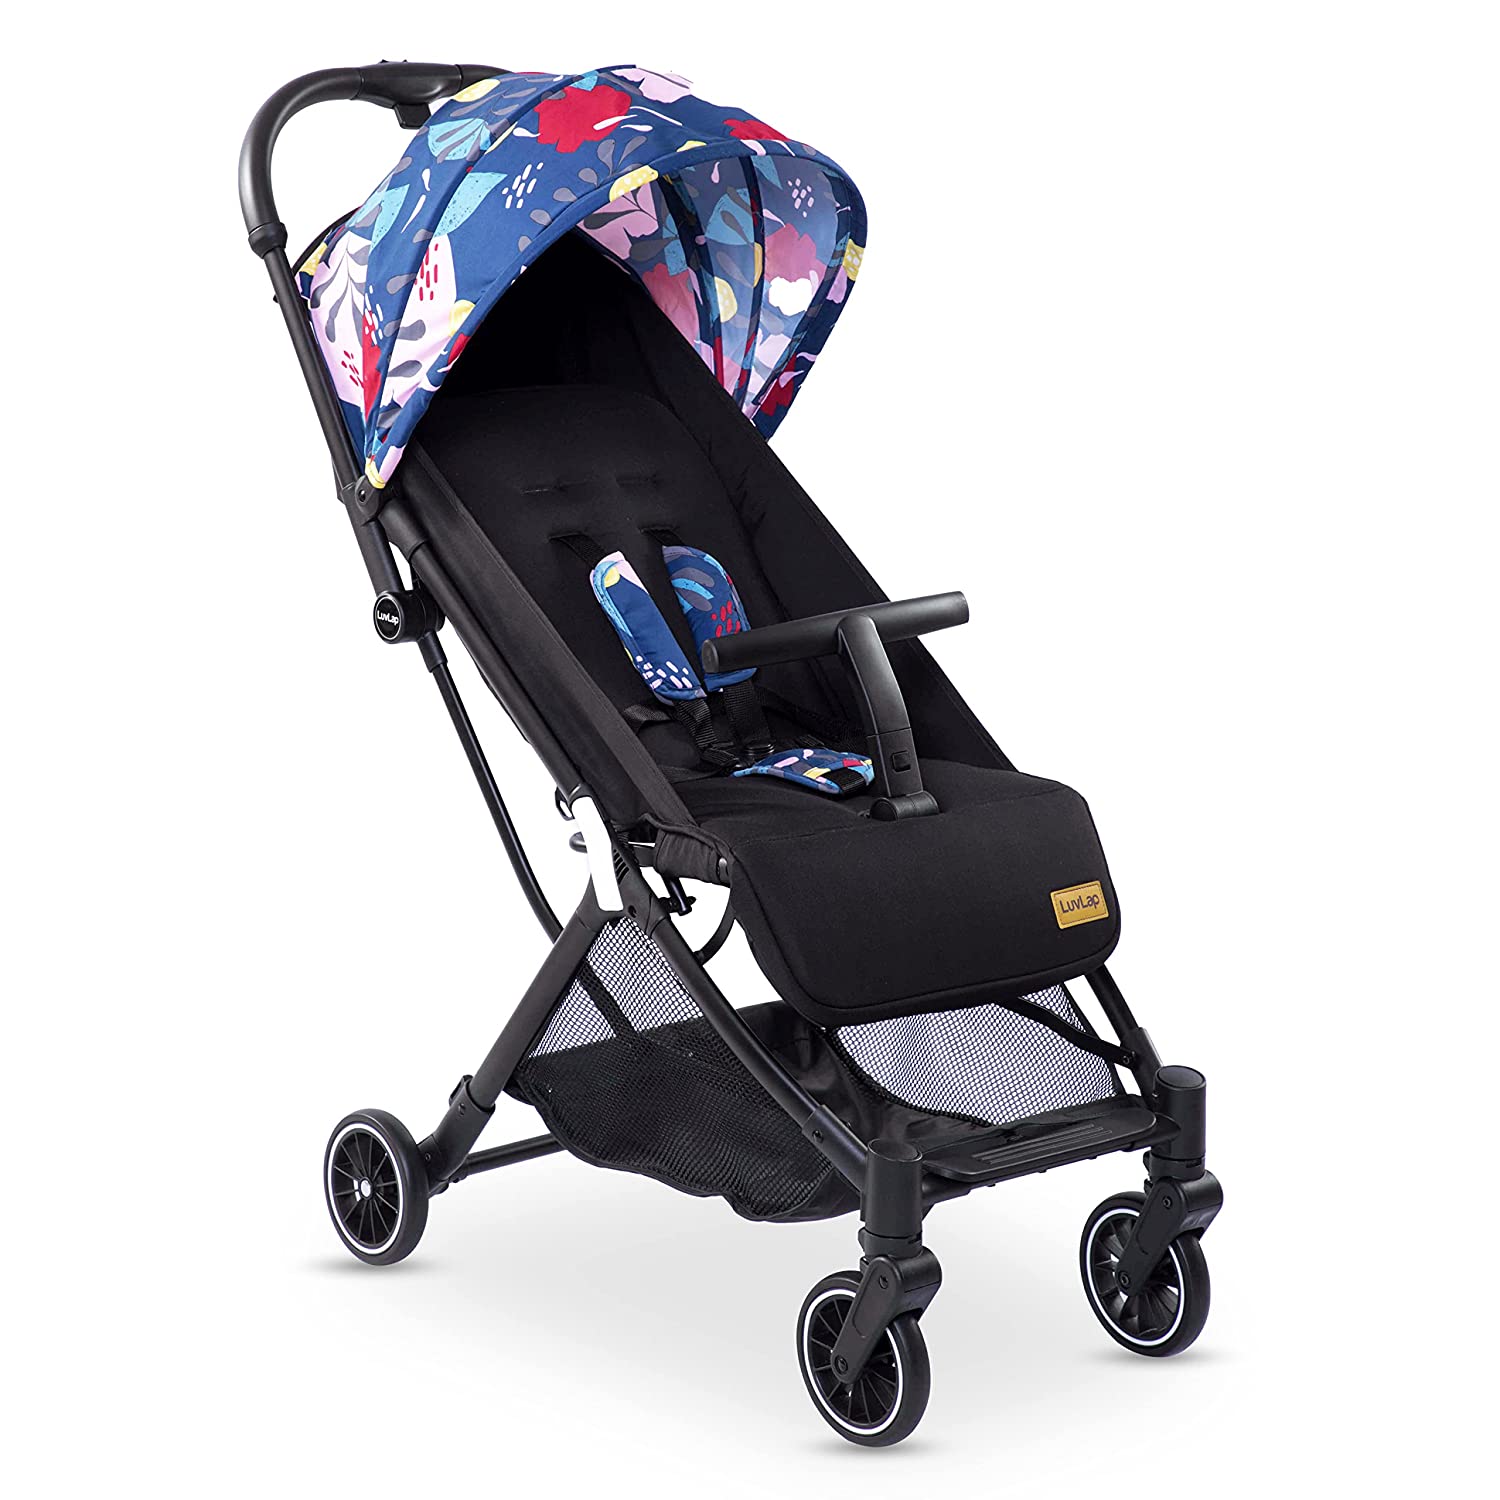 Luv Lap Urbane Baby Stroller (Multicolor Printed)